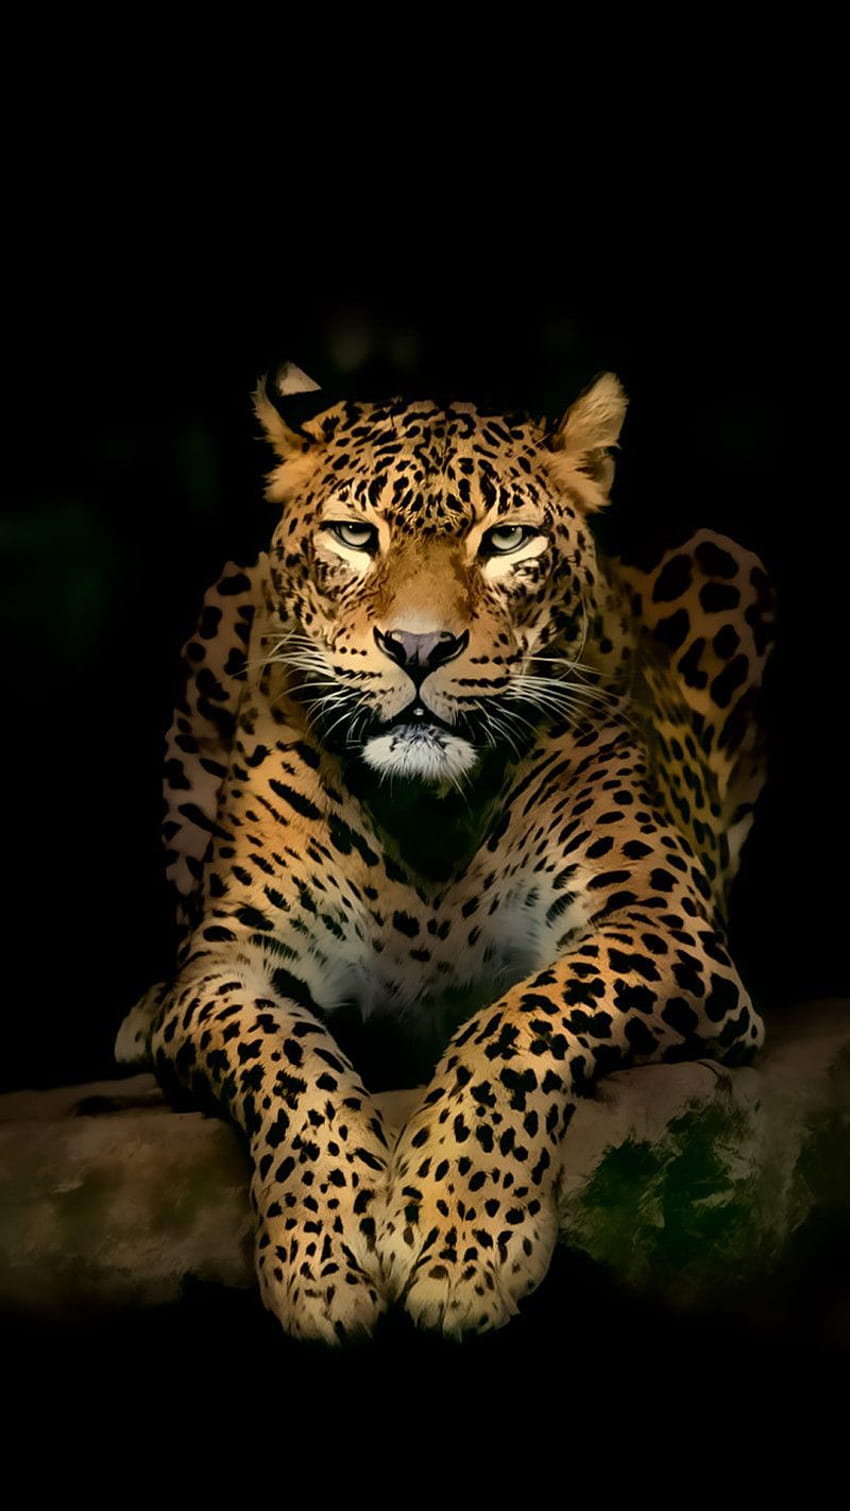 Leopard Cat Wallpaper for Samsung